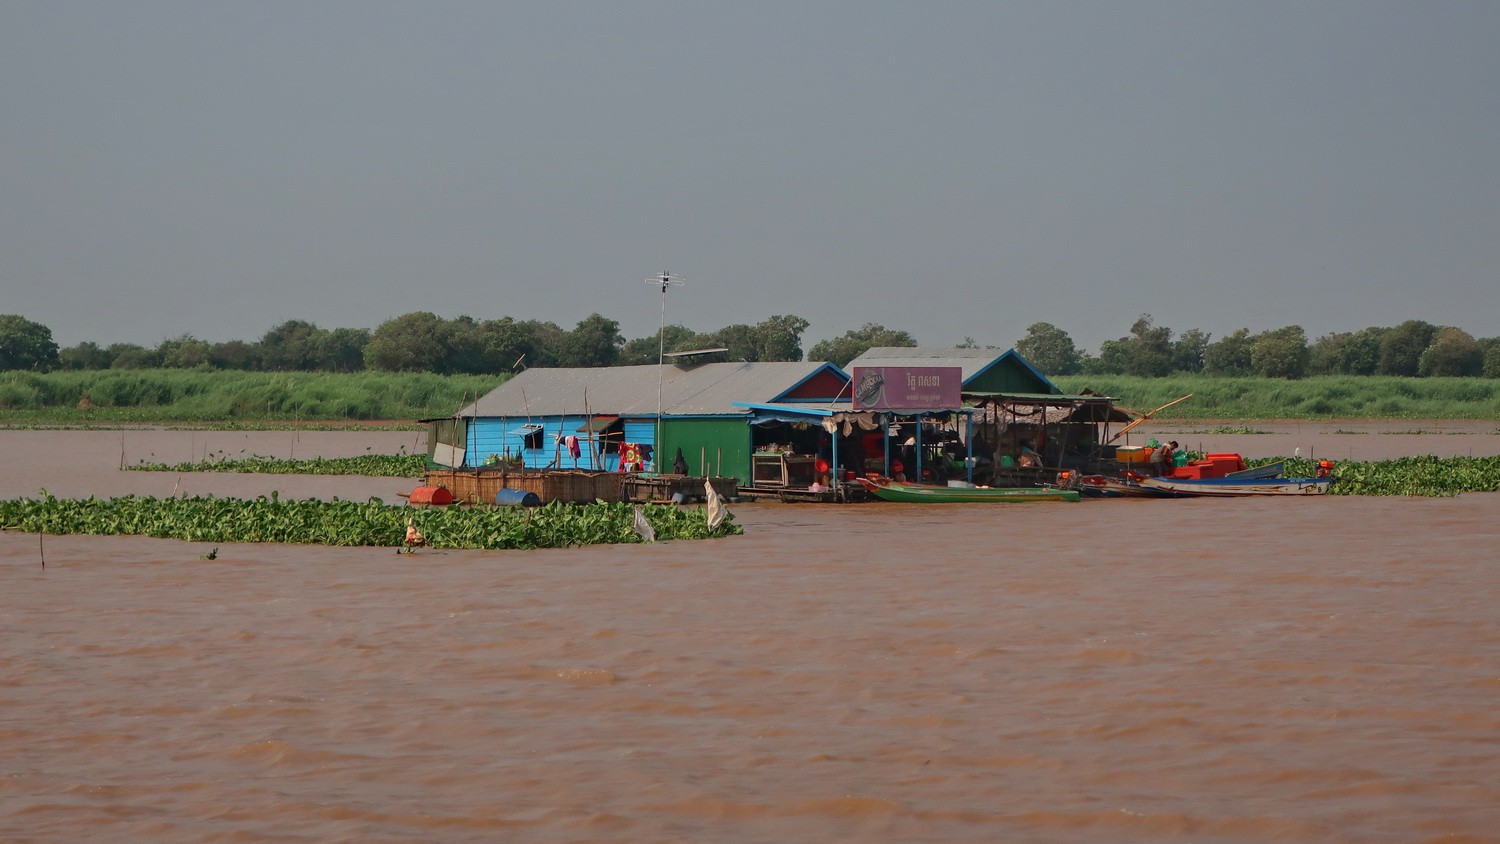 Floating houses on Tonle Sap Lake